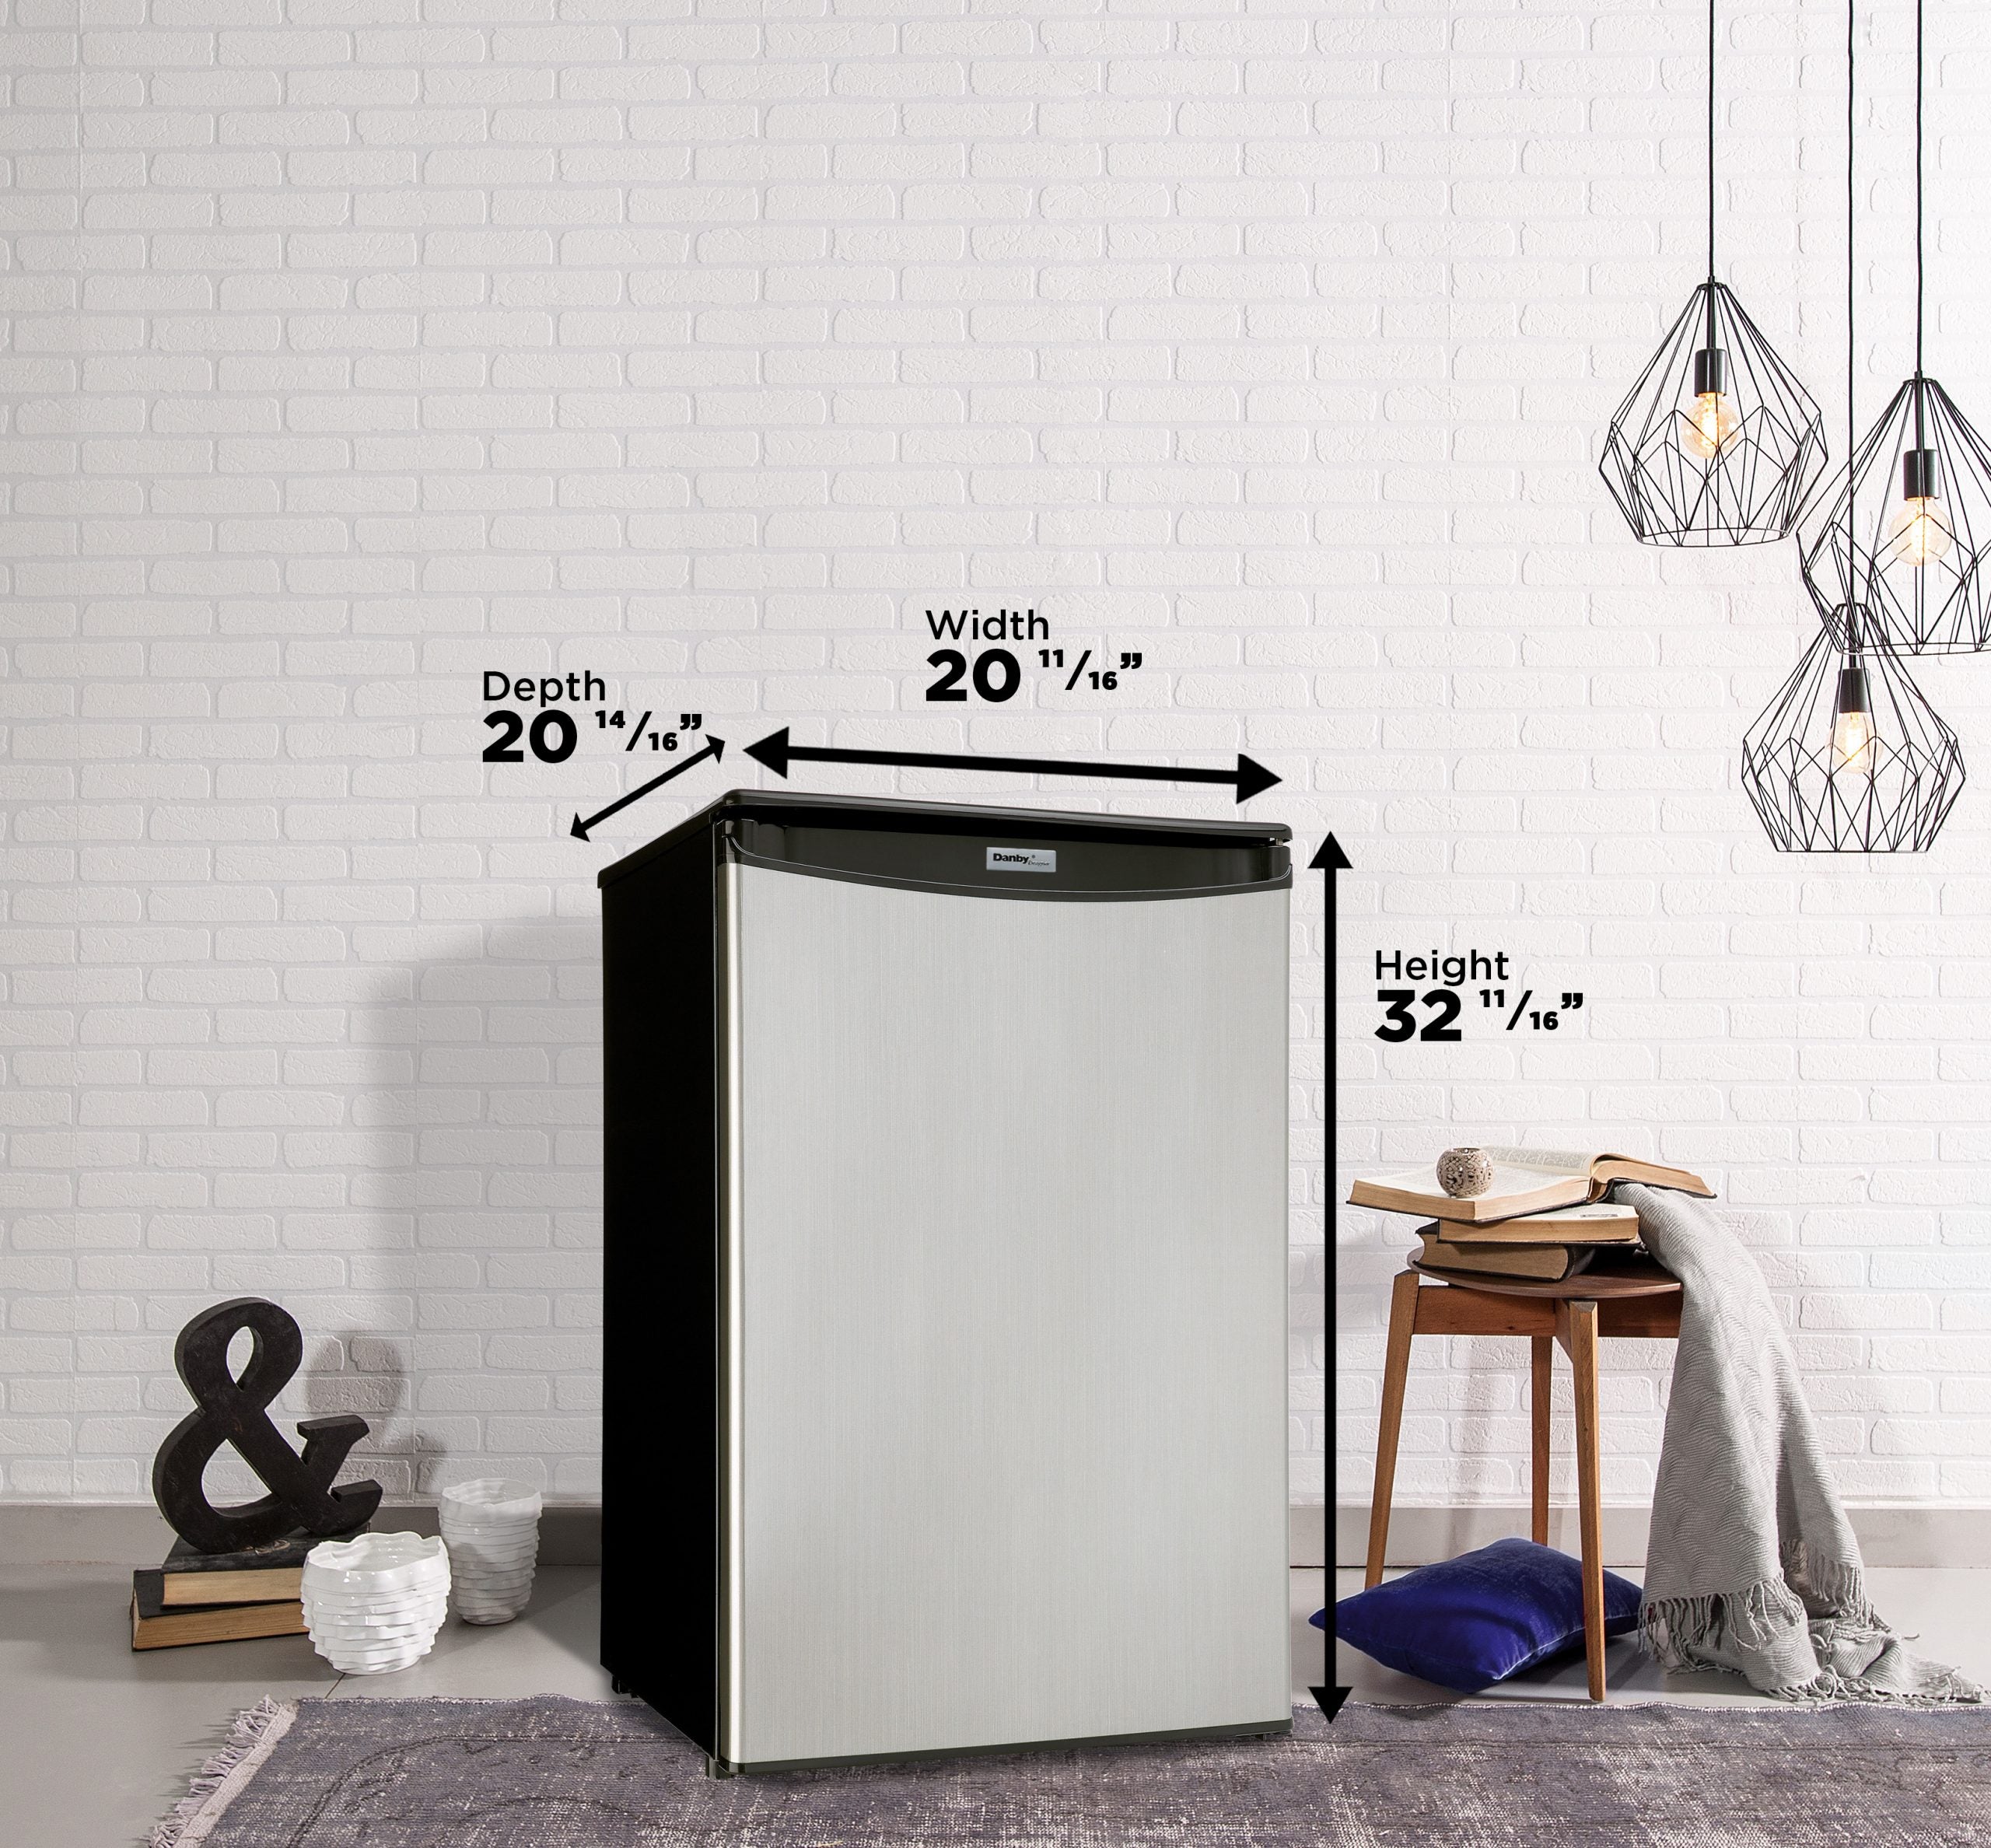 Danby - 52.55 Inch 4.4 cu. ft Mini Fridge Refrigerator in Stainless - DAR044A4BSLDD